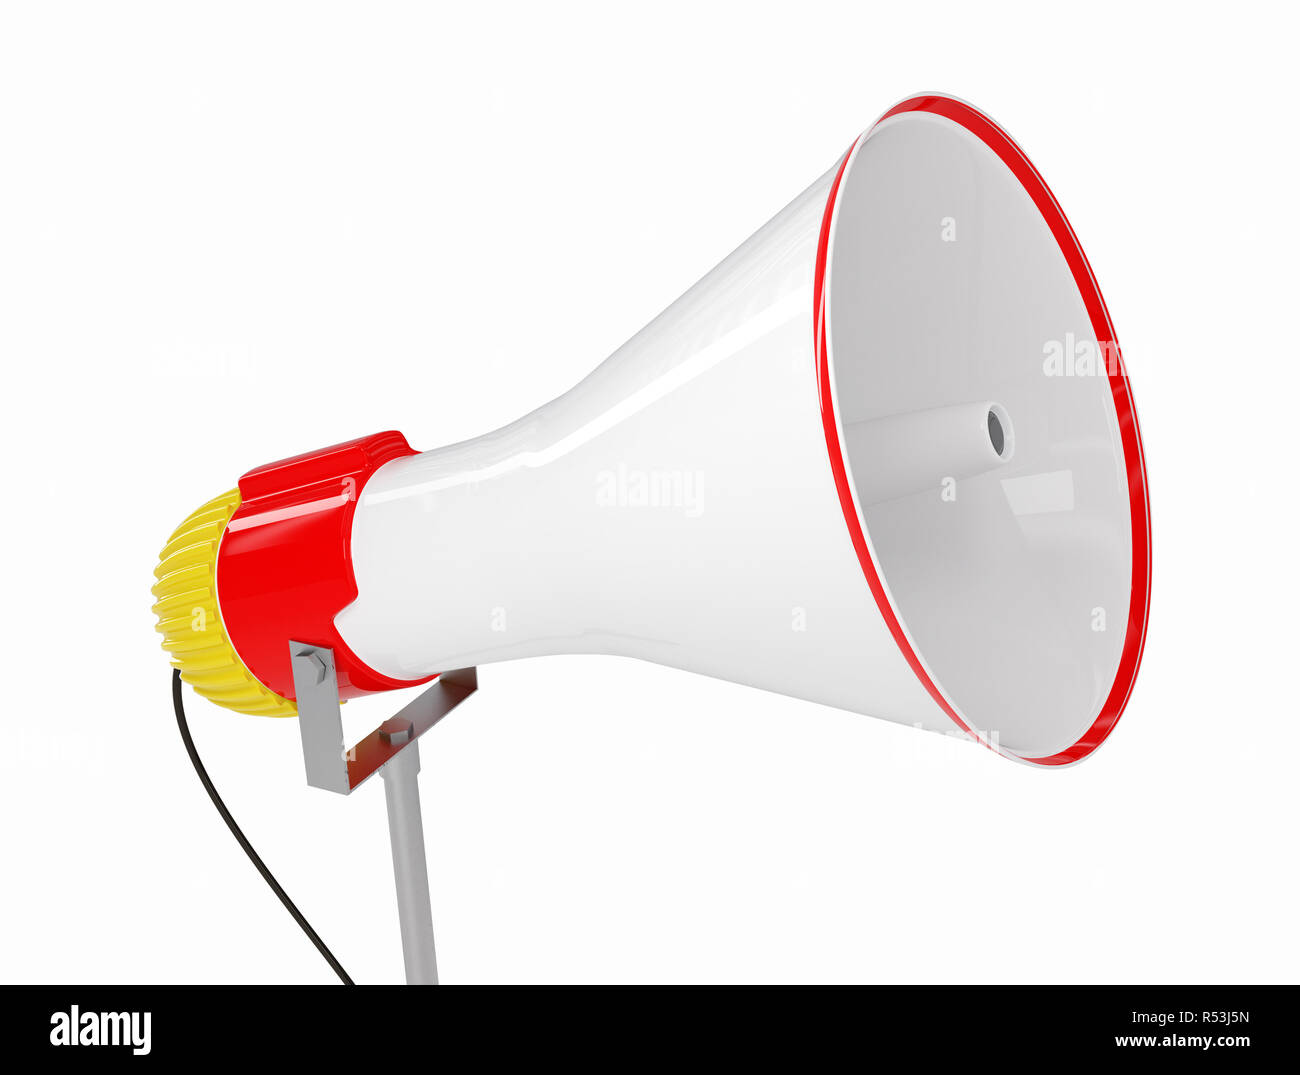 Realistic Megaphone Promoter Trumpet Loudspeaker 3d Render Megafon For Sale  Ad Or News Announce Bullhorn For Voice Amplifier Vector Set Stock  Illustration - Download Image Now - iStock